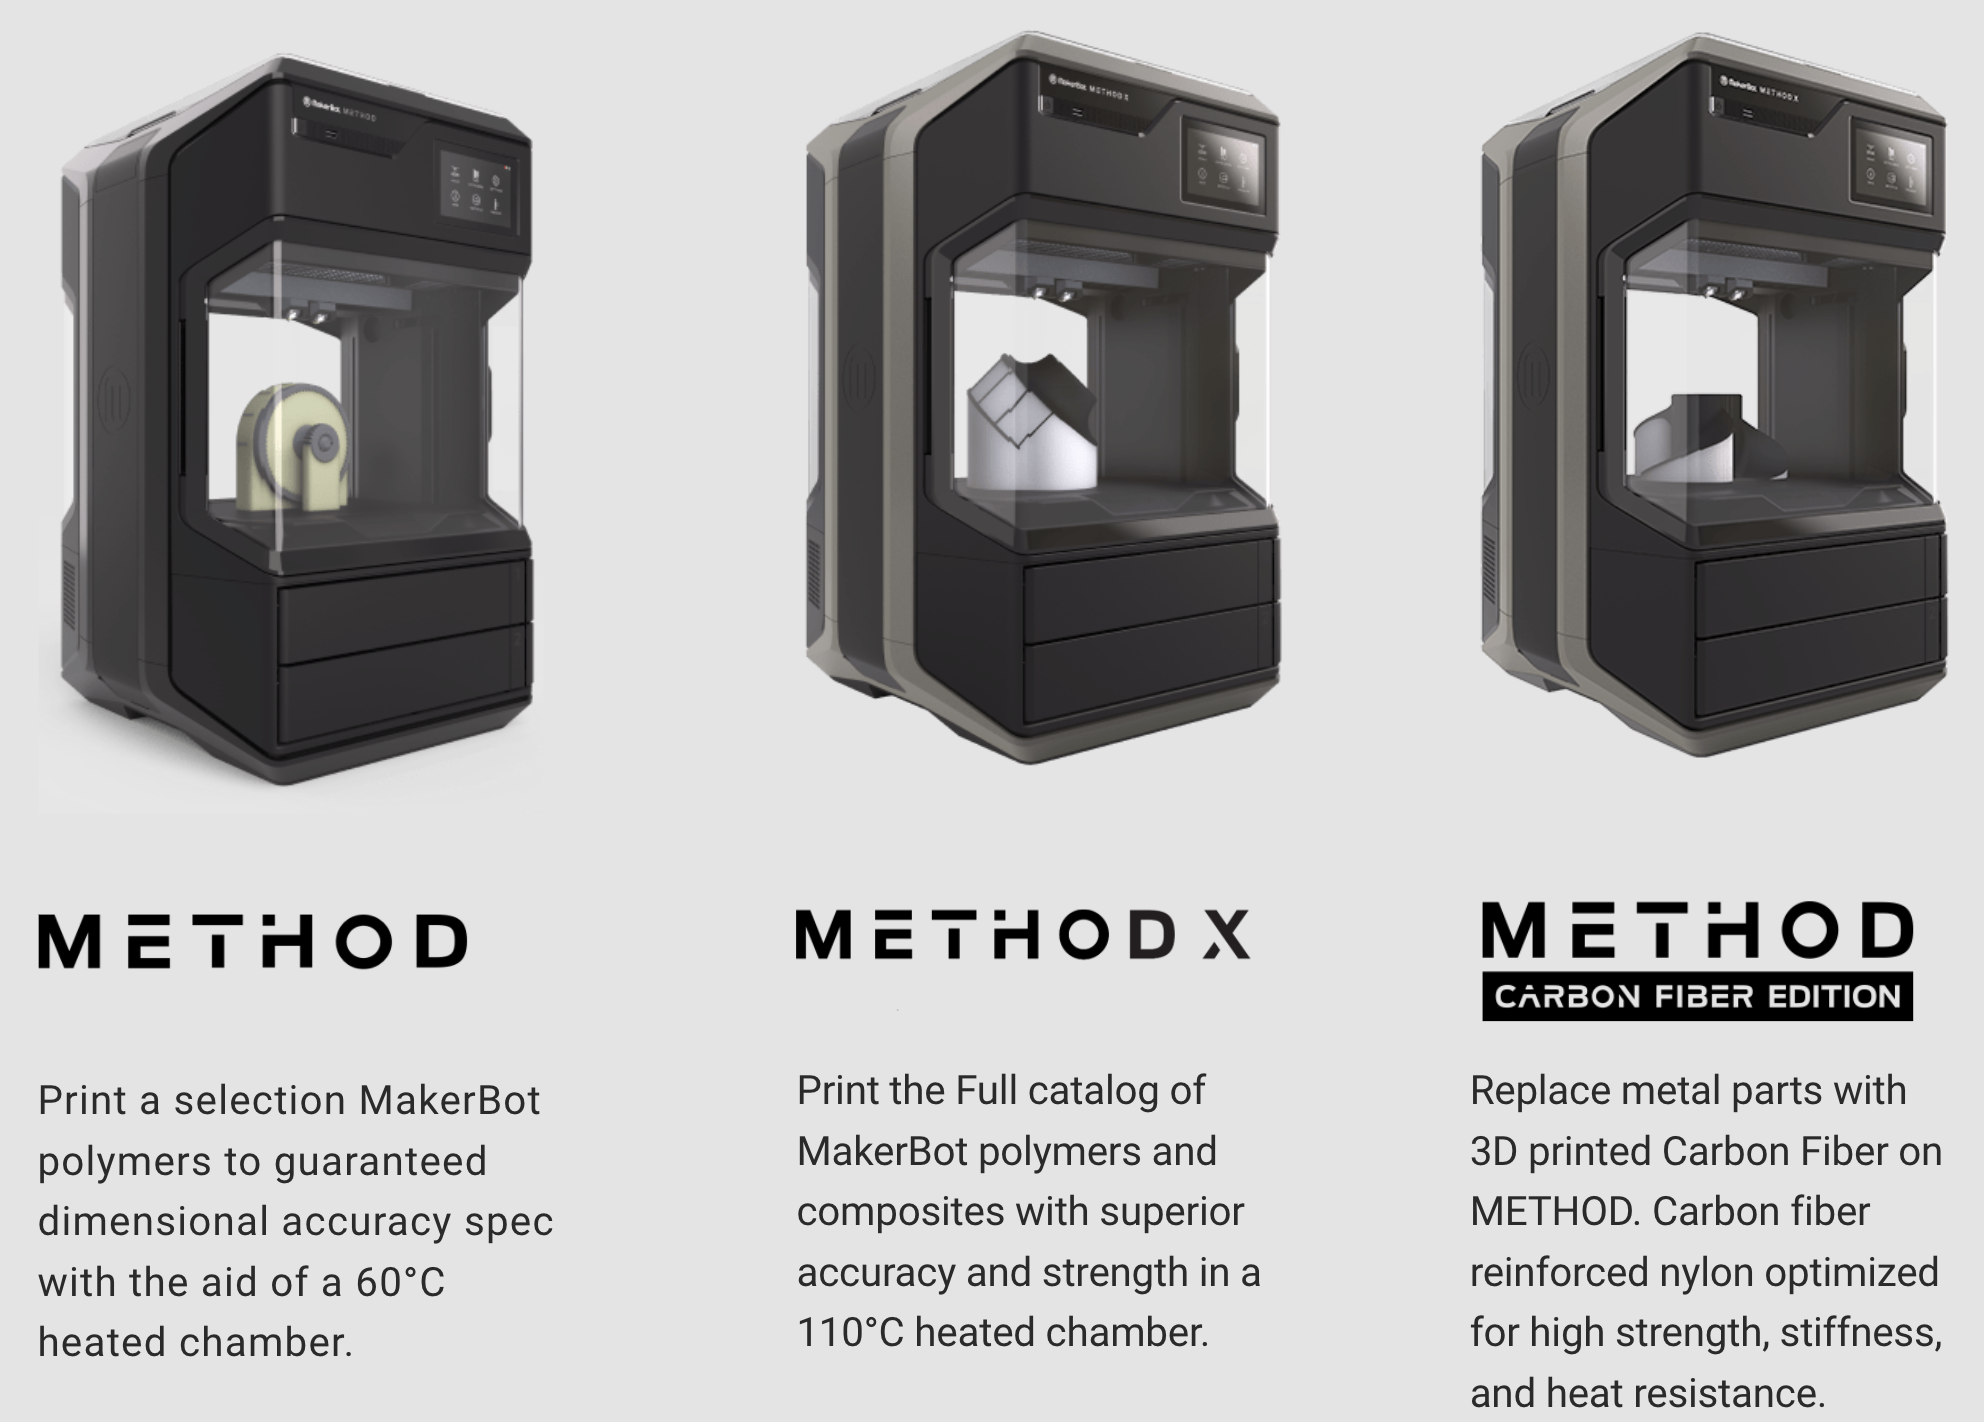 MakerBot-METHOD-3D-Printer-Description-10